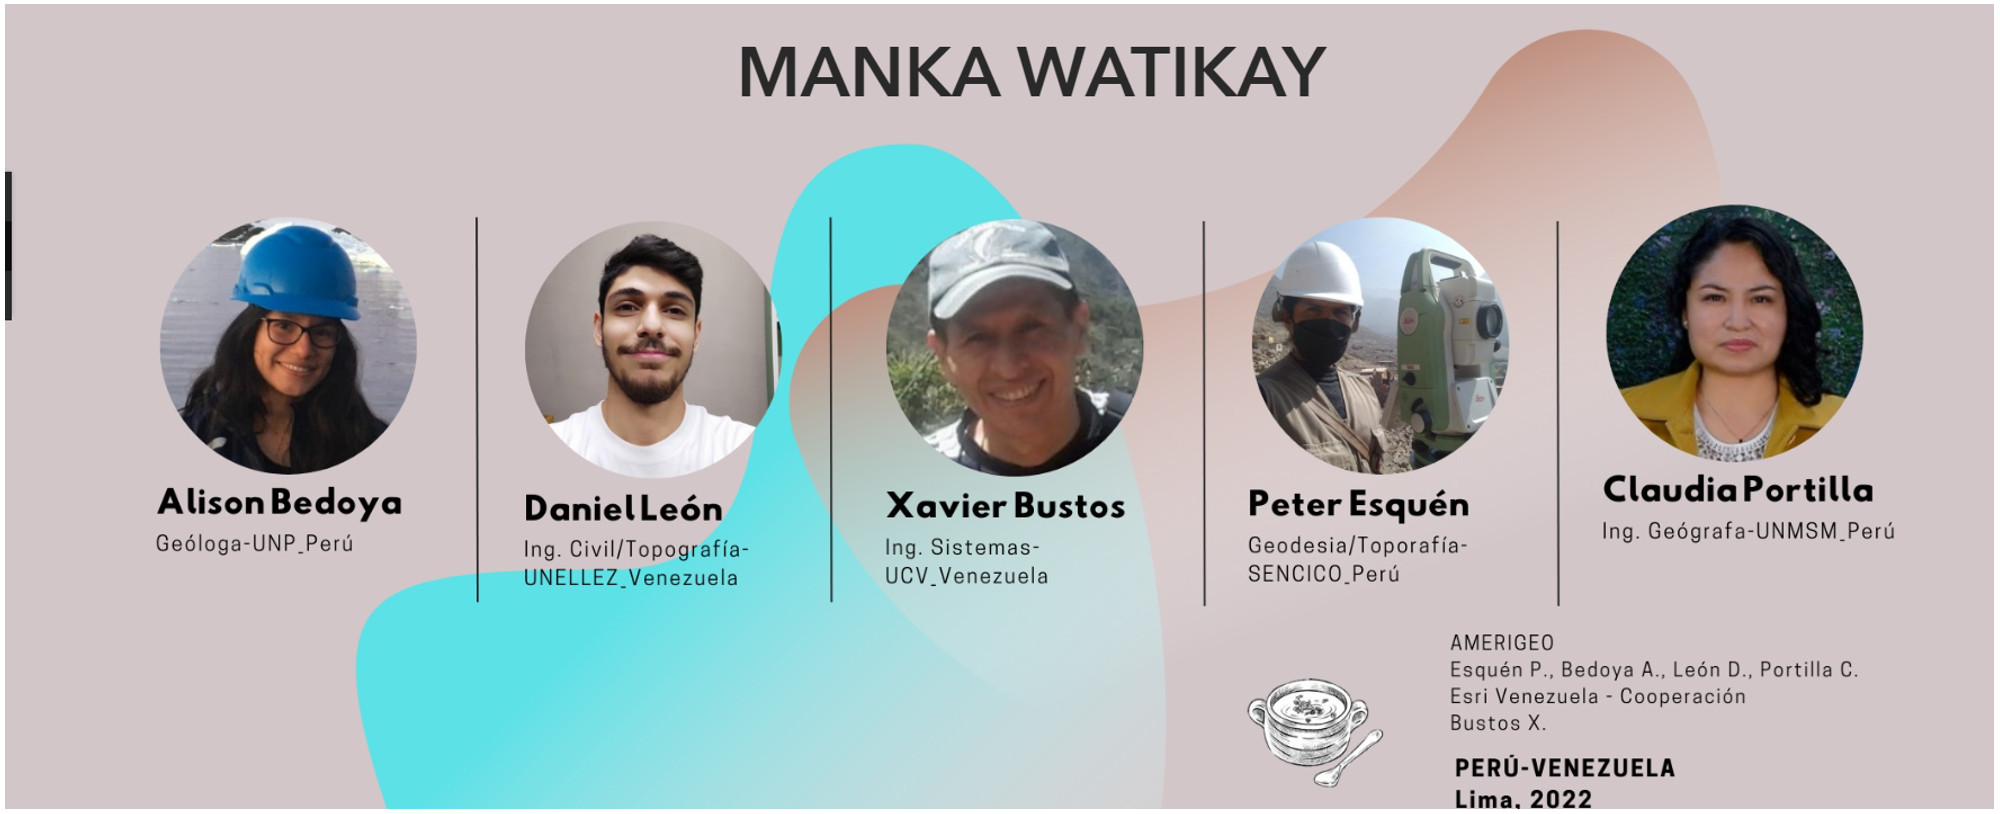 Manka Watiqay team at the Mapatón Peru 2022